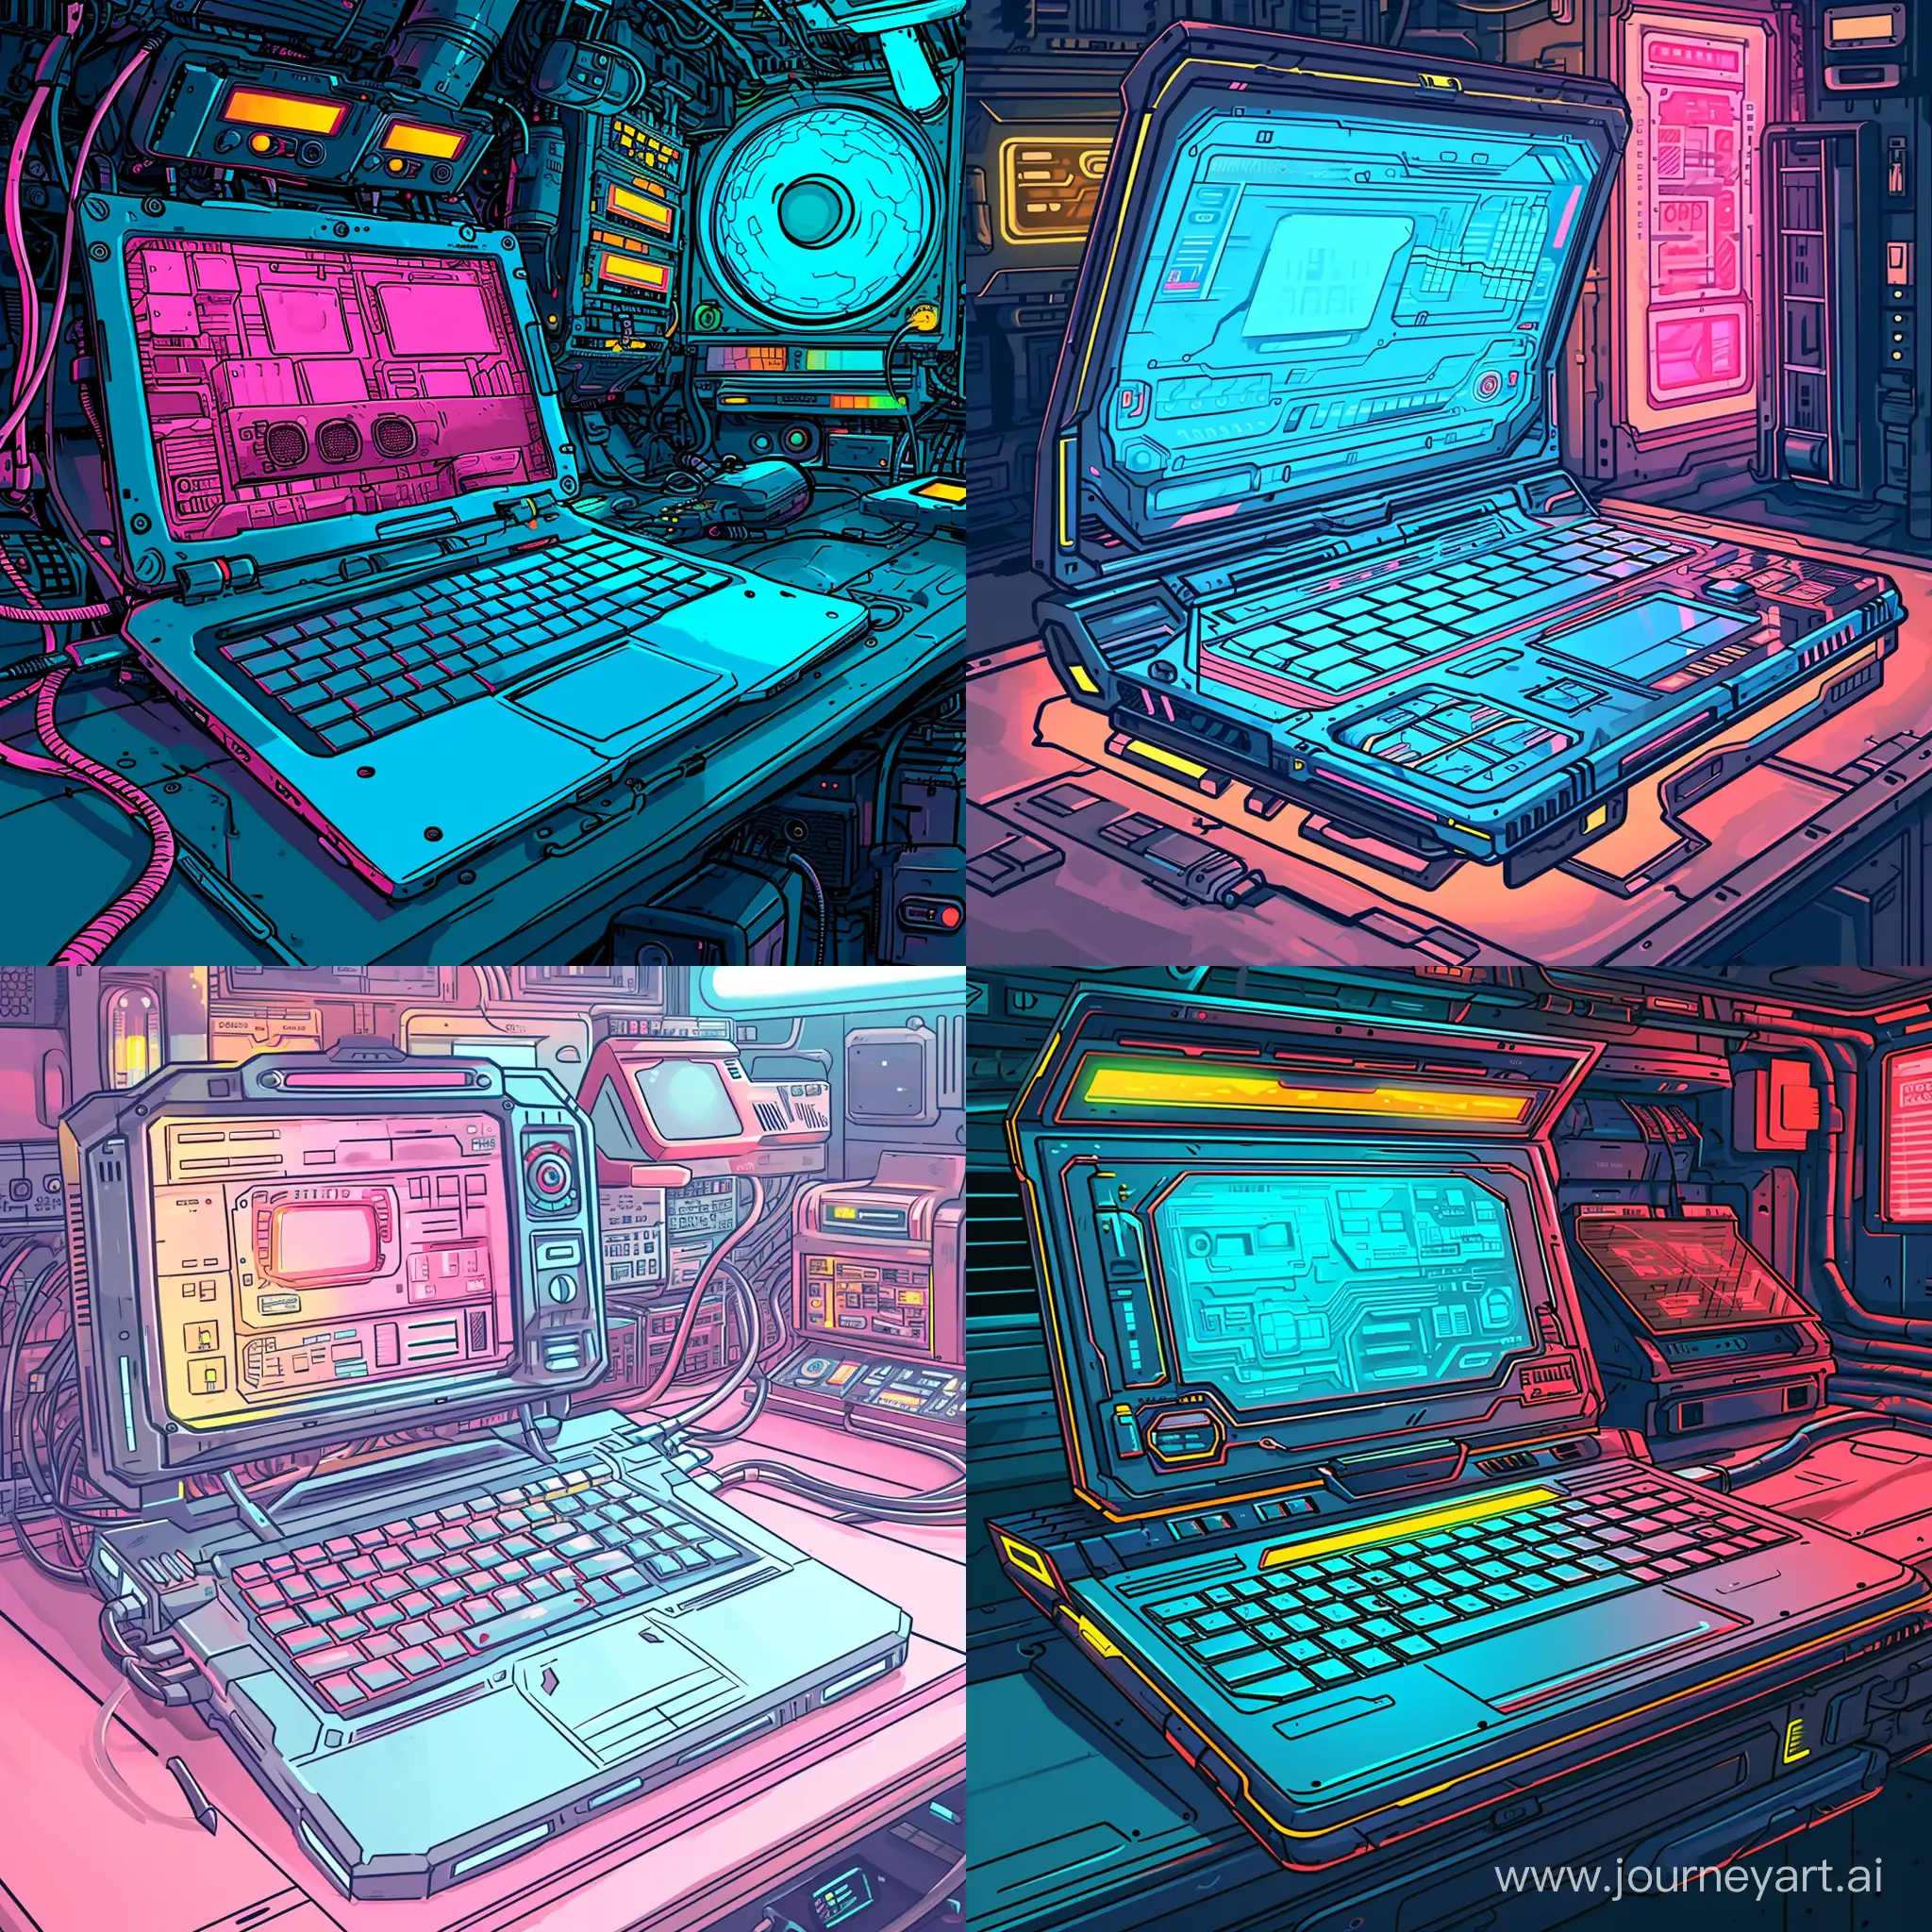 Futuristic-Laptop-in-Vibrant-Postcyberpunk-Biopunk-Style